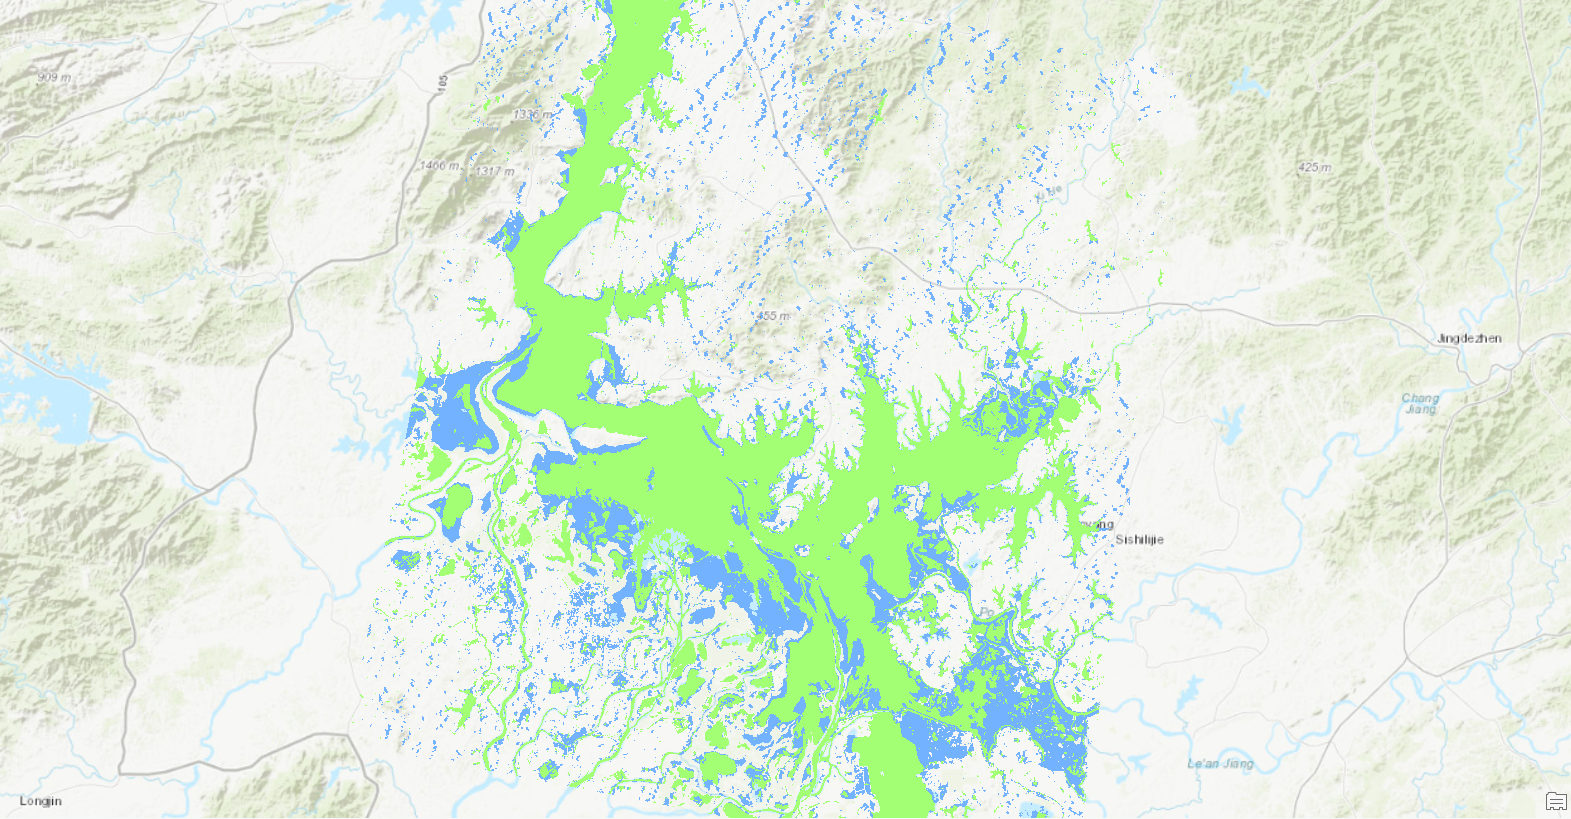 Change Detection of Shrinking Lakes